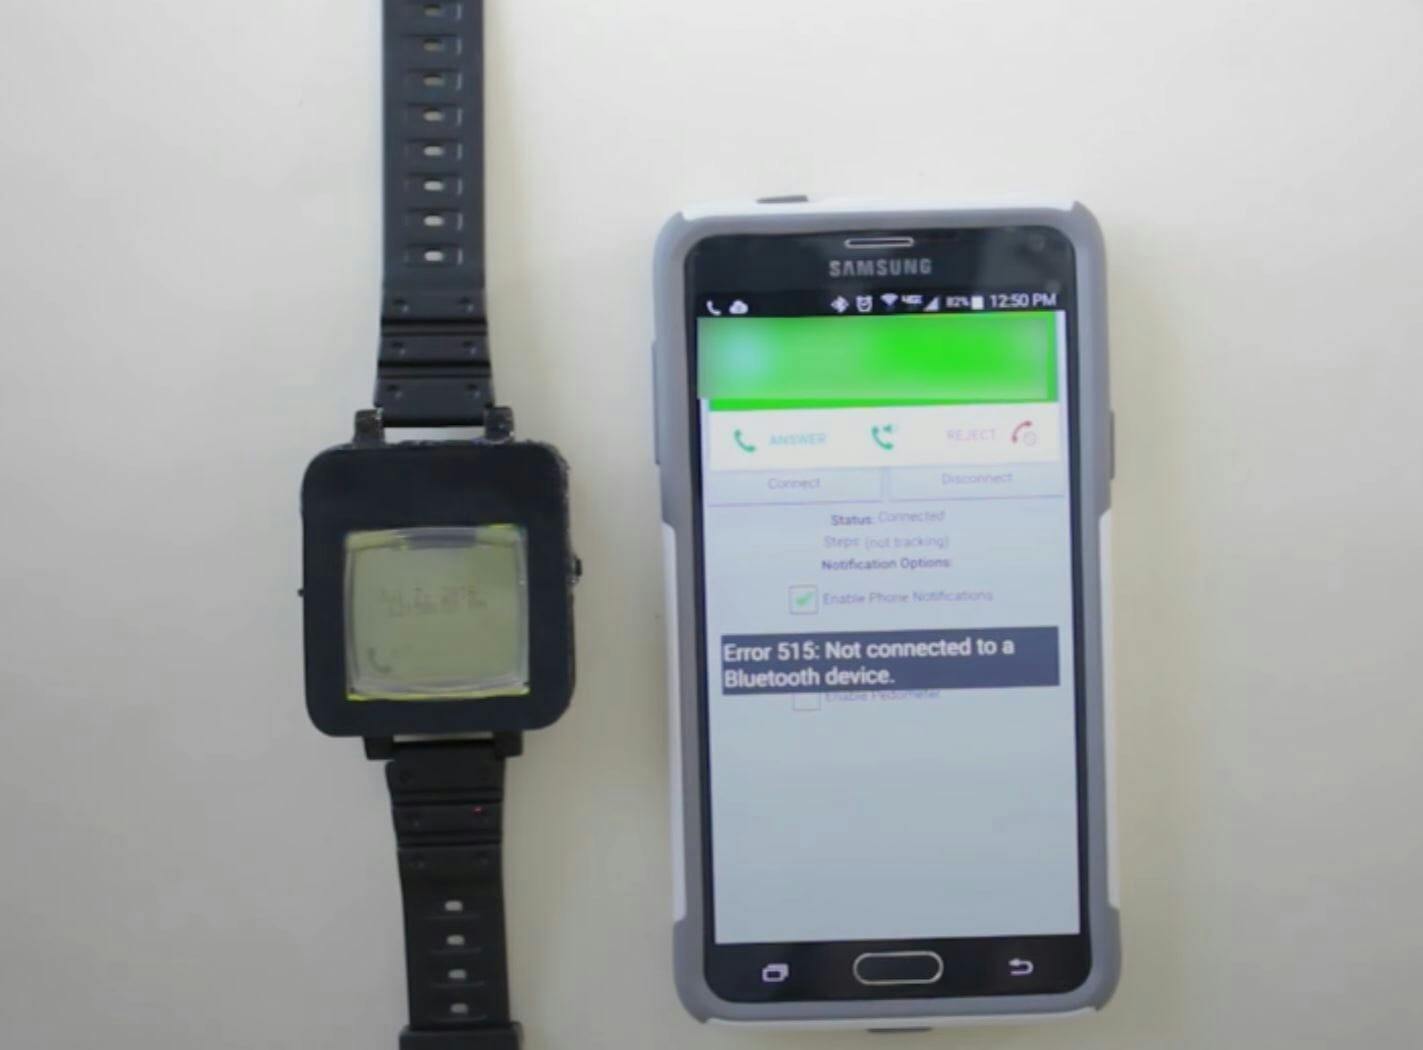 nokia 1110 smartwatch youtube video invetion